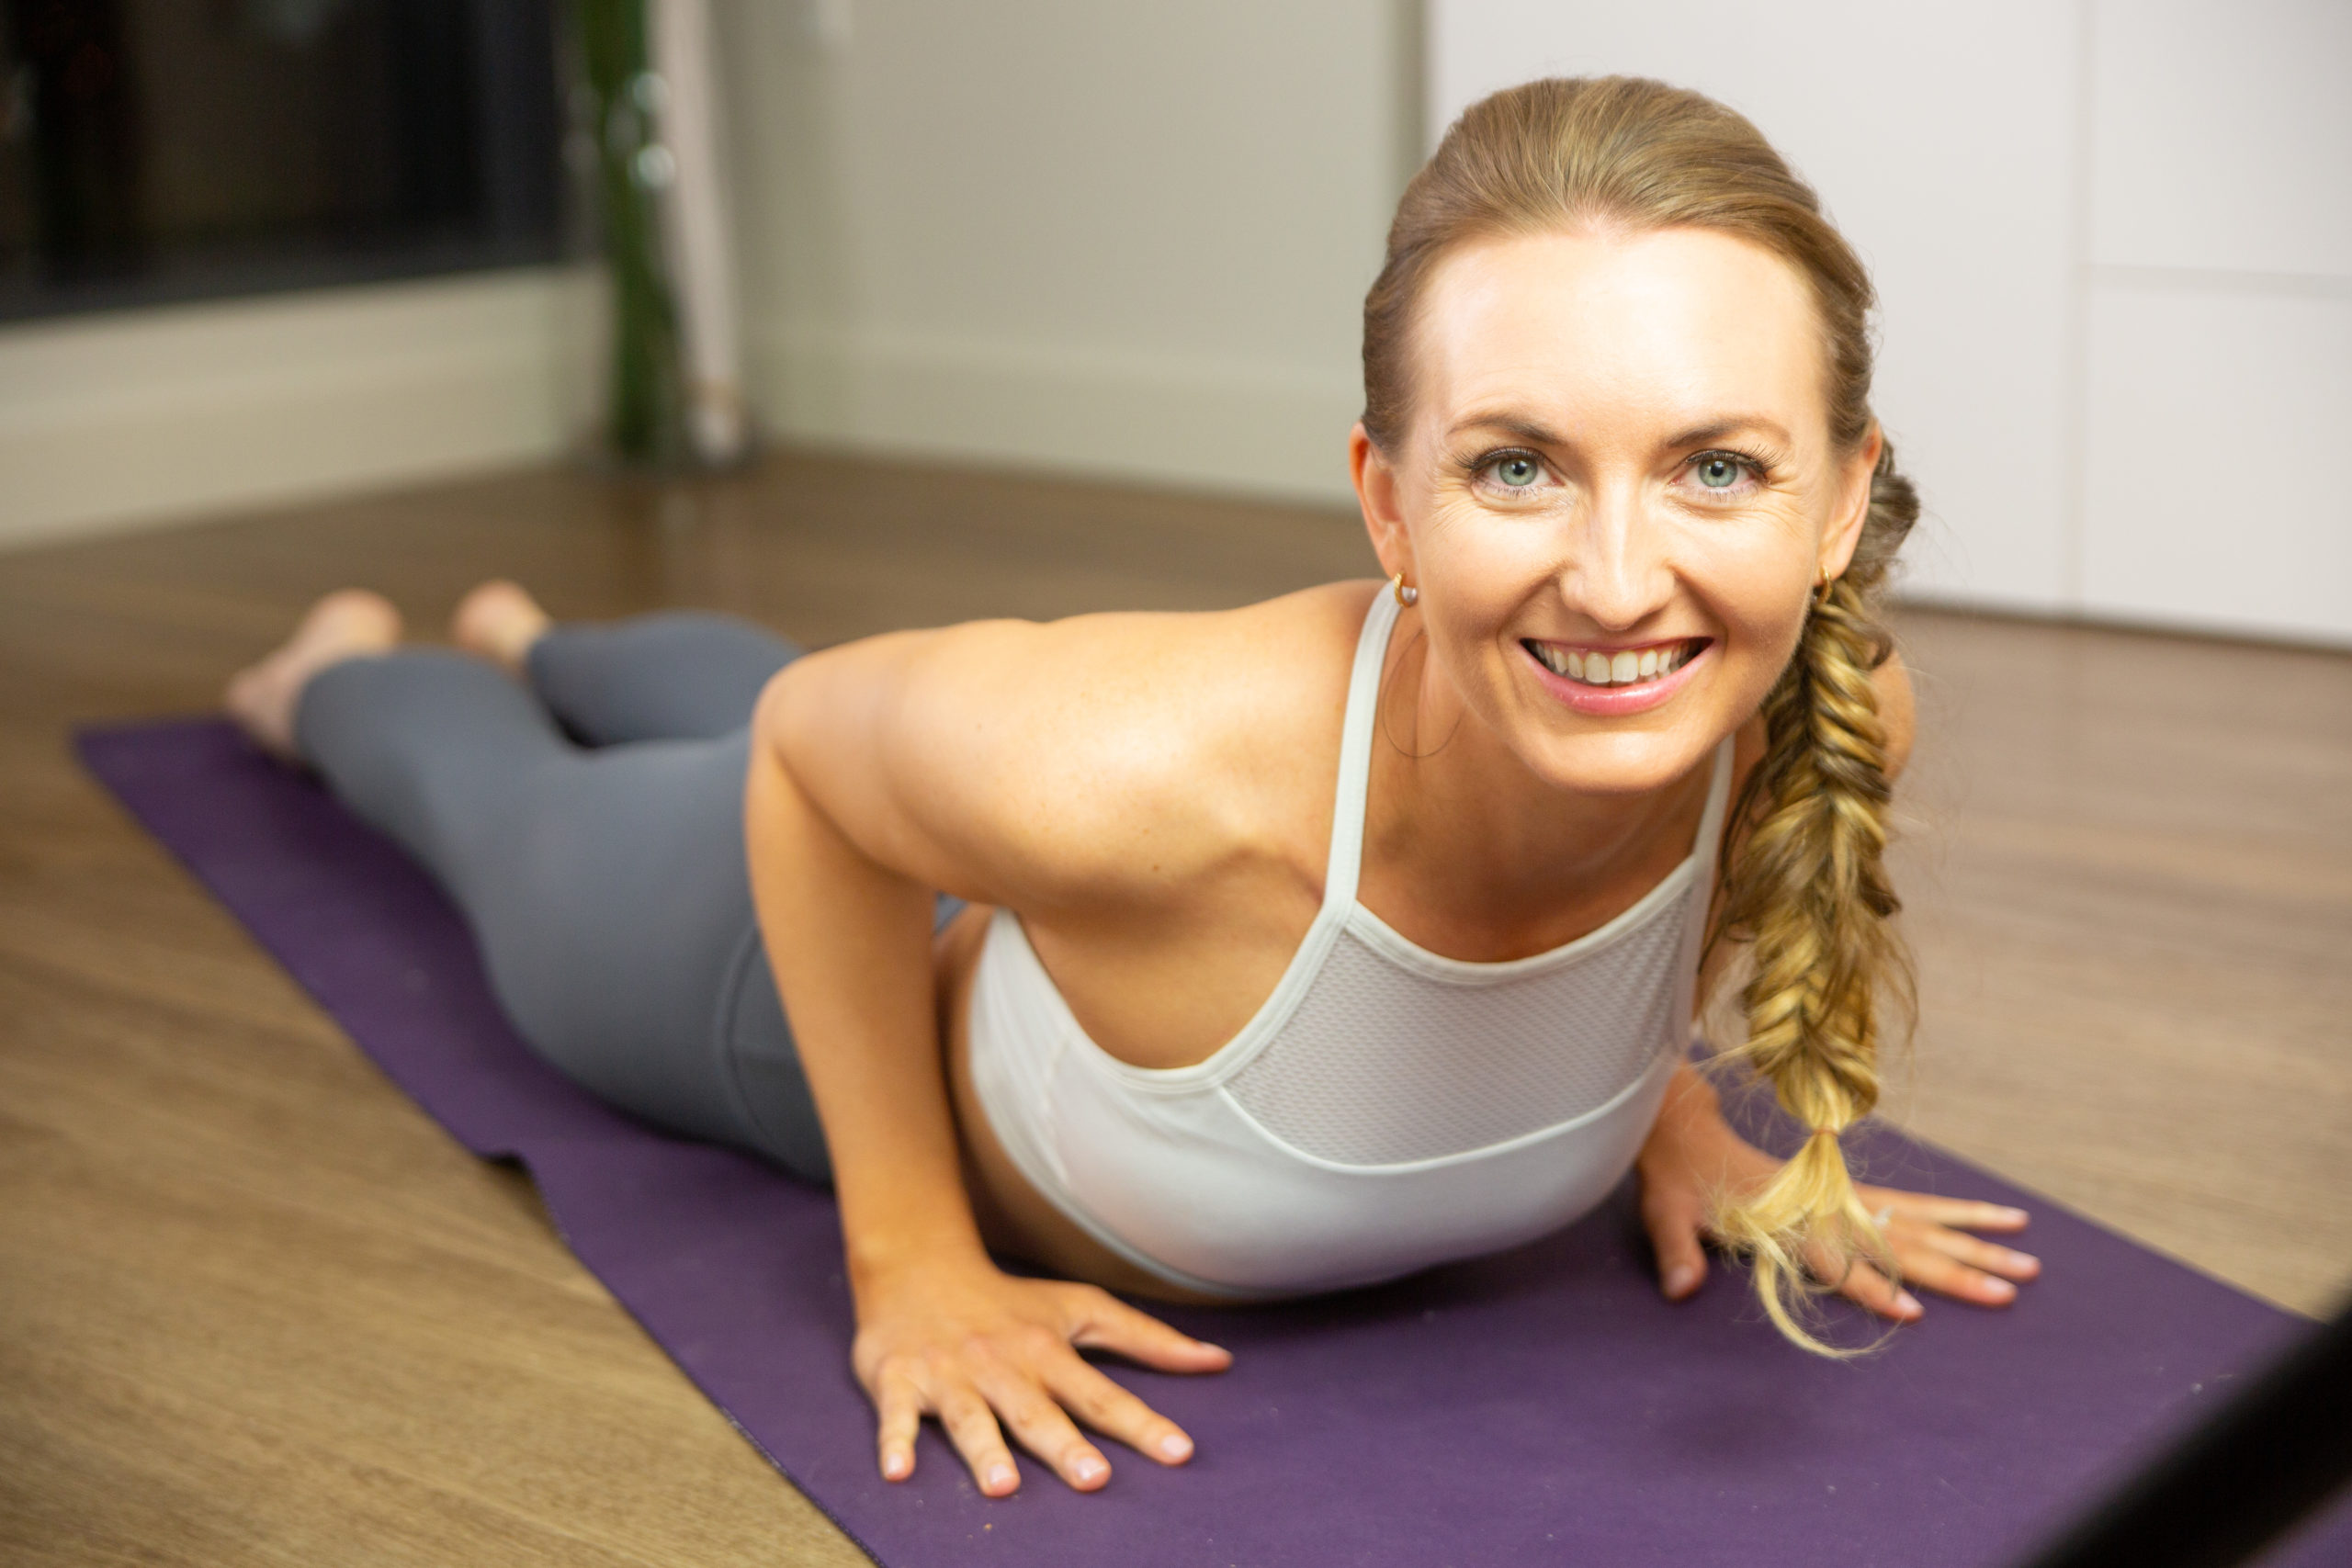 How to do 12 Basic Yoga Poses (Asanas): Names, Steps, Images, Benefits